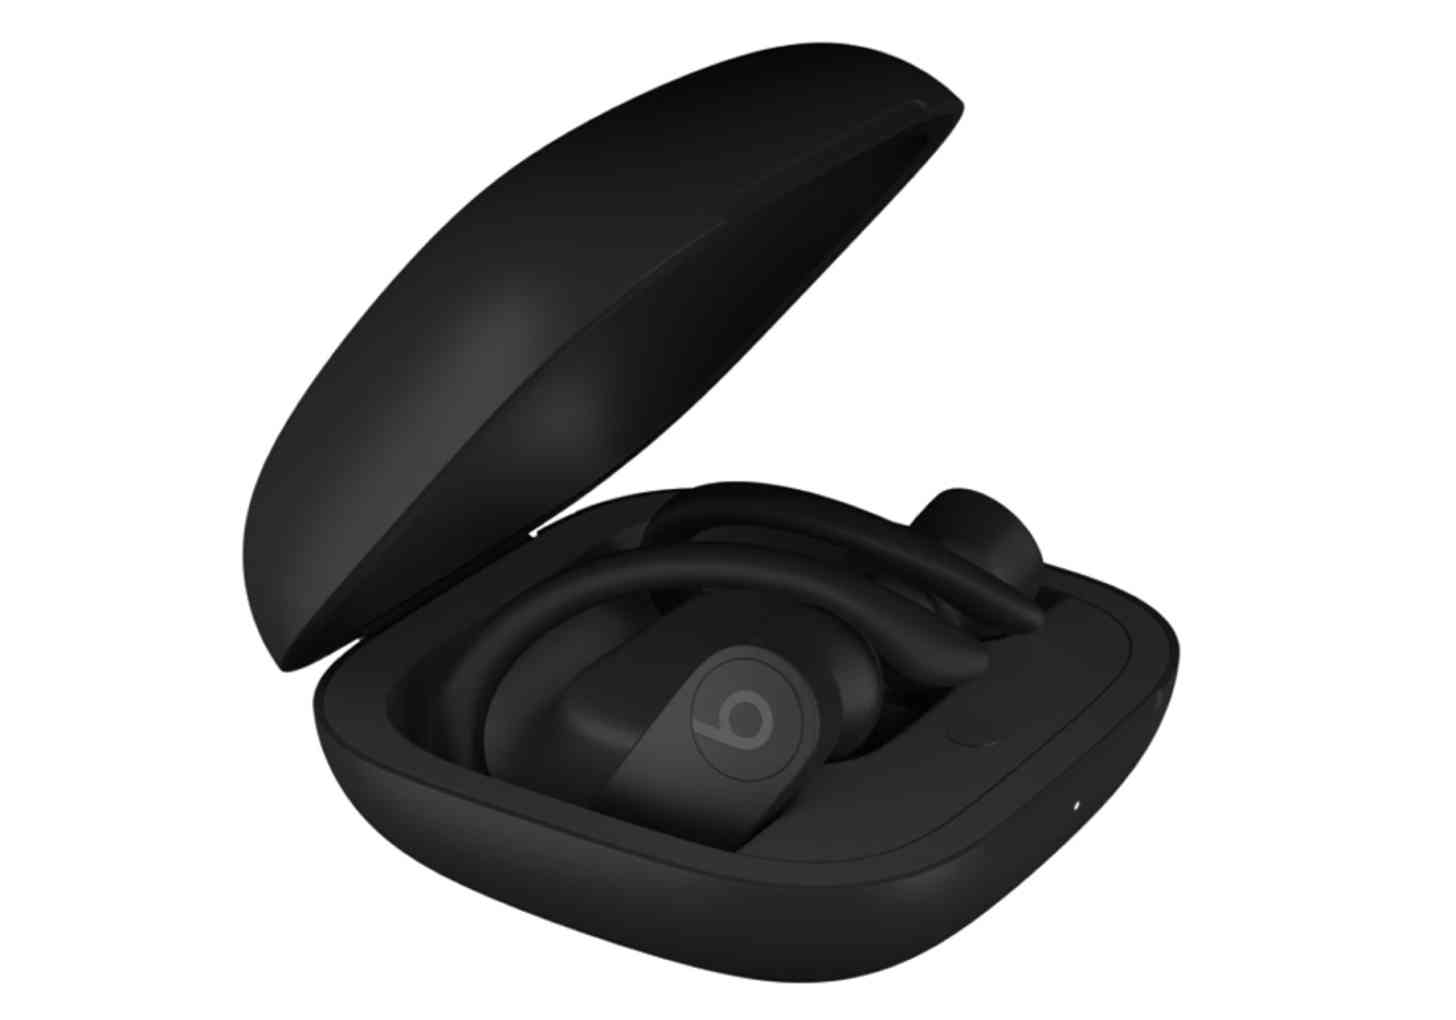 Apple Powerbeats Pro truly wireless headphones